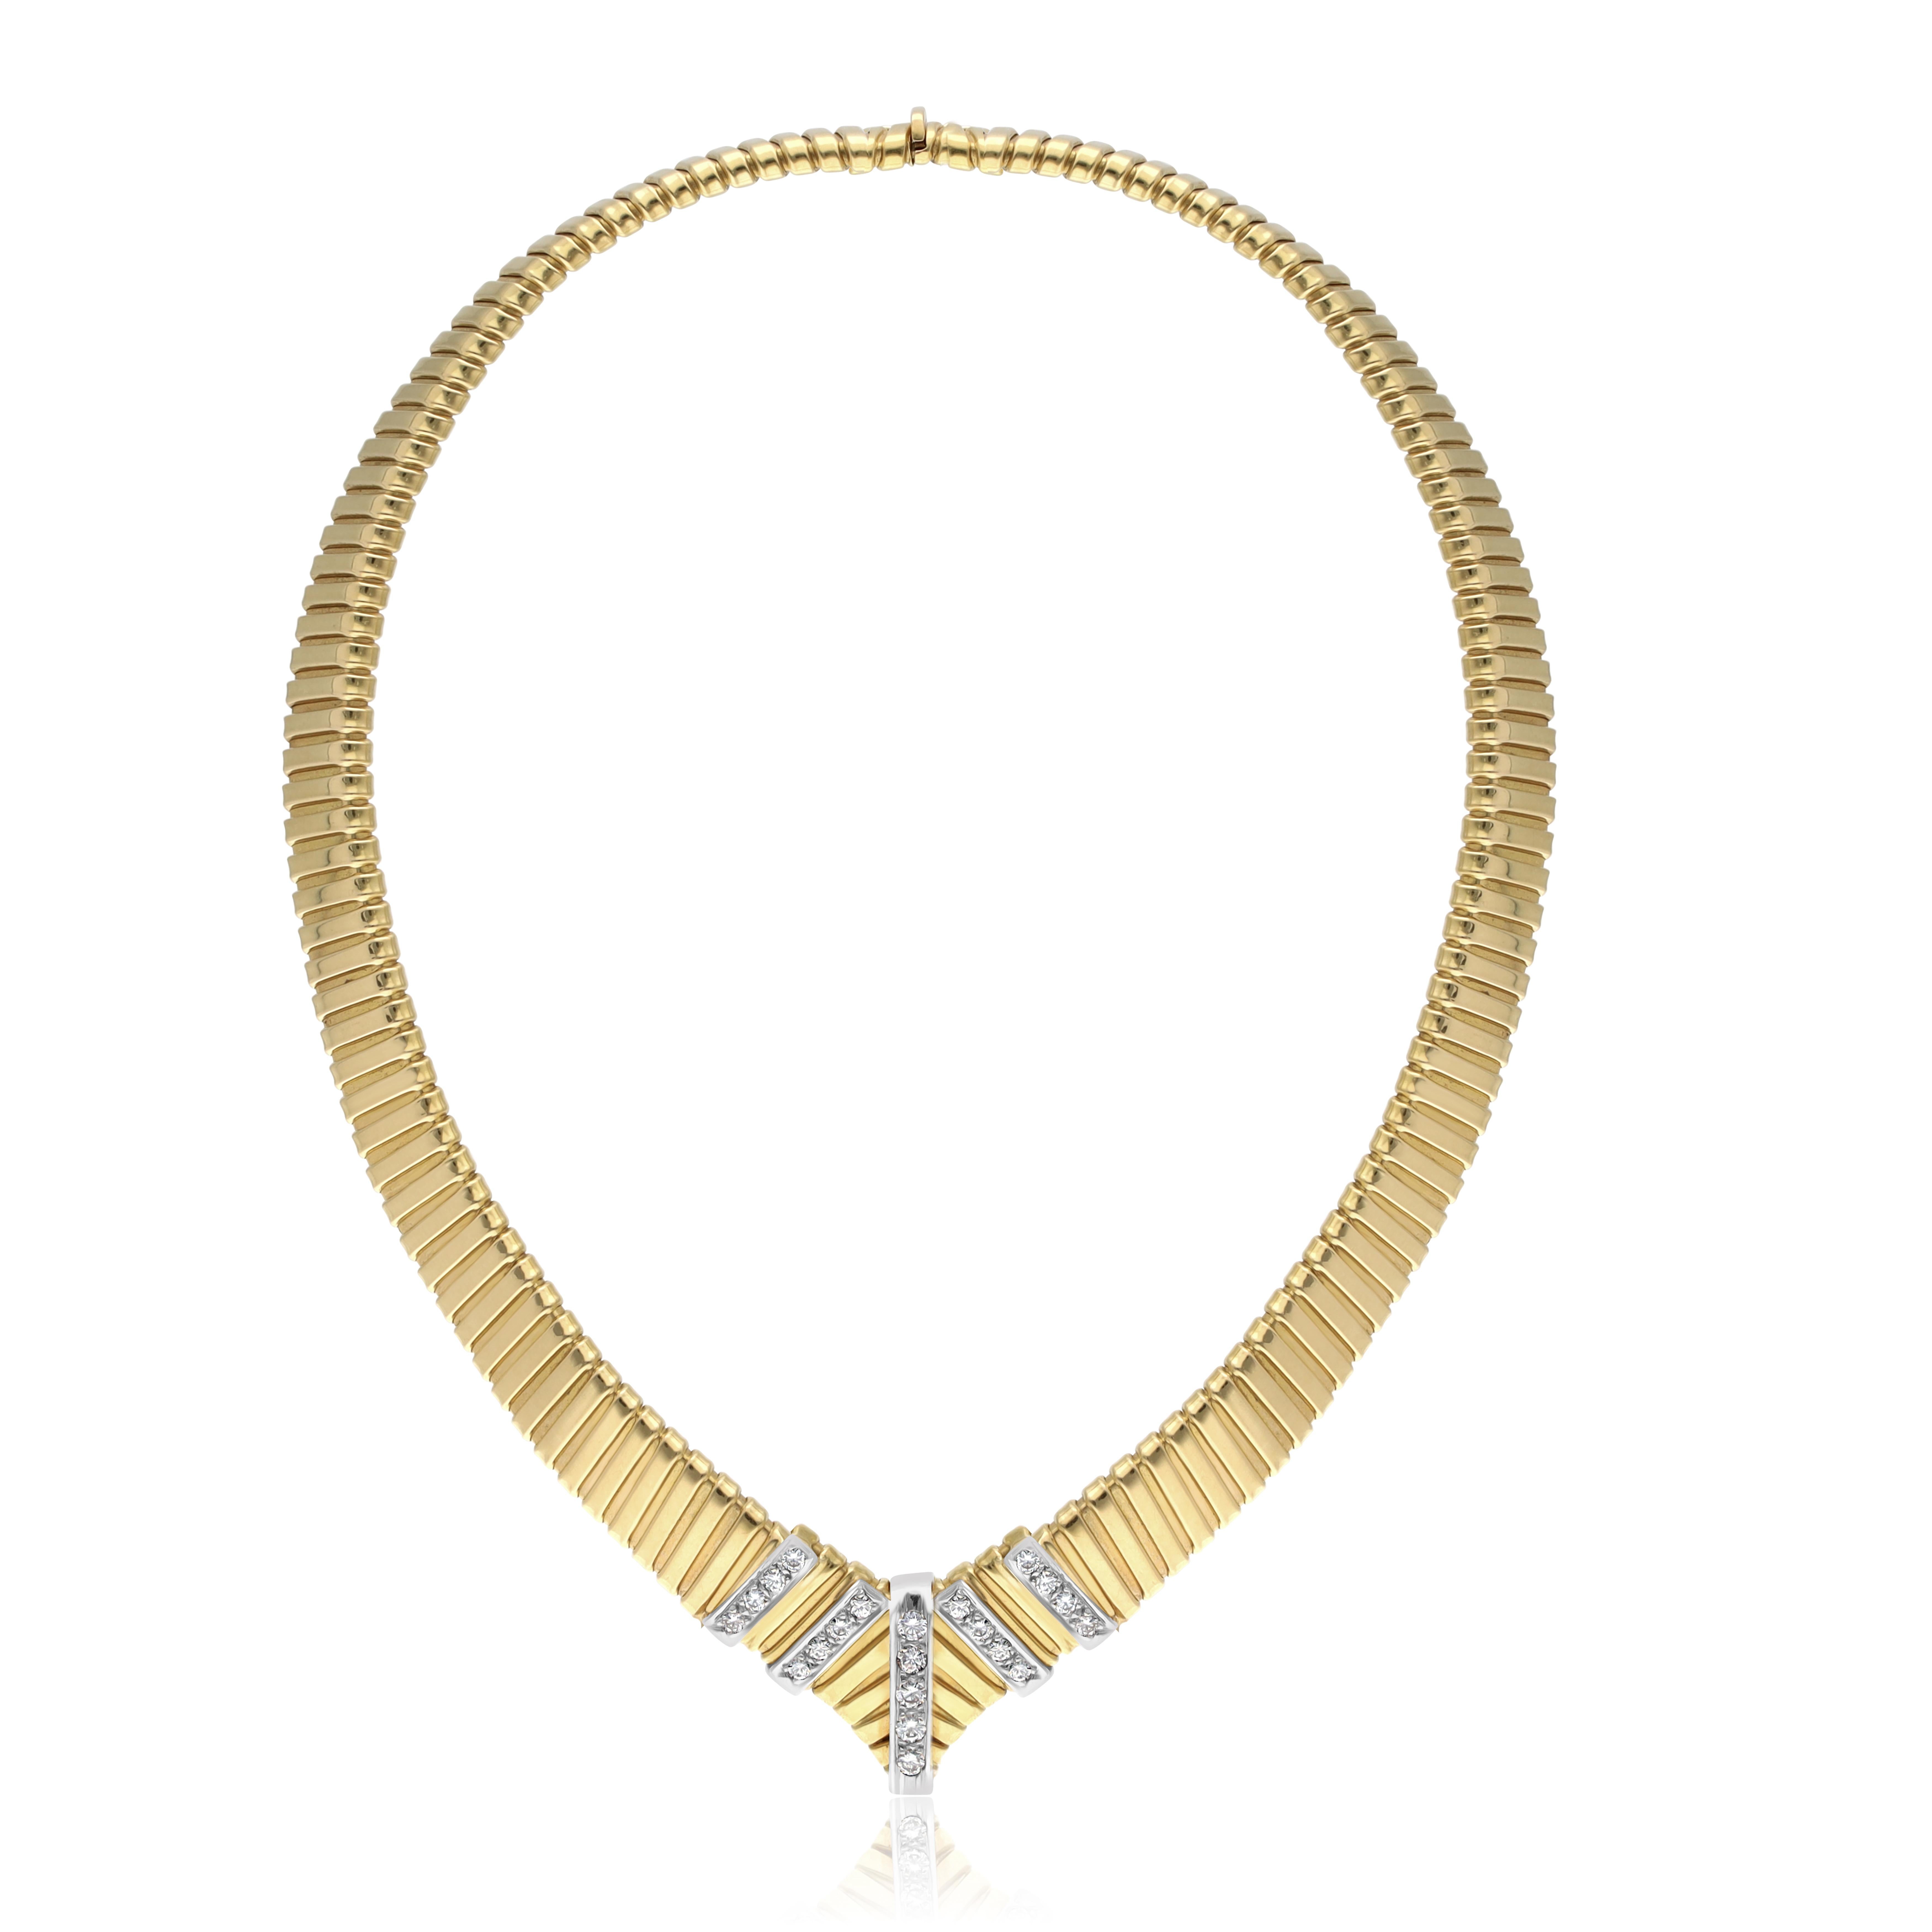 Brilliant Cut 1970s Tubogas Necklace with Diamonds